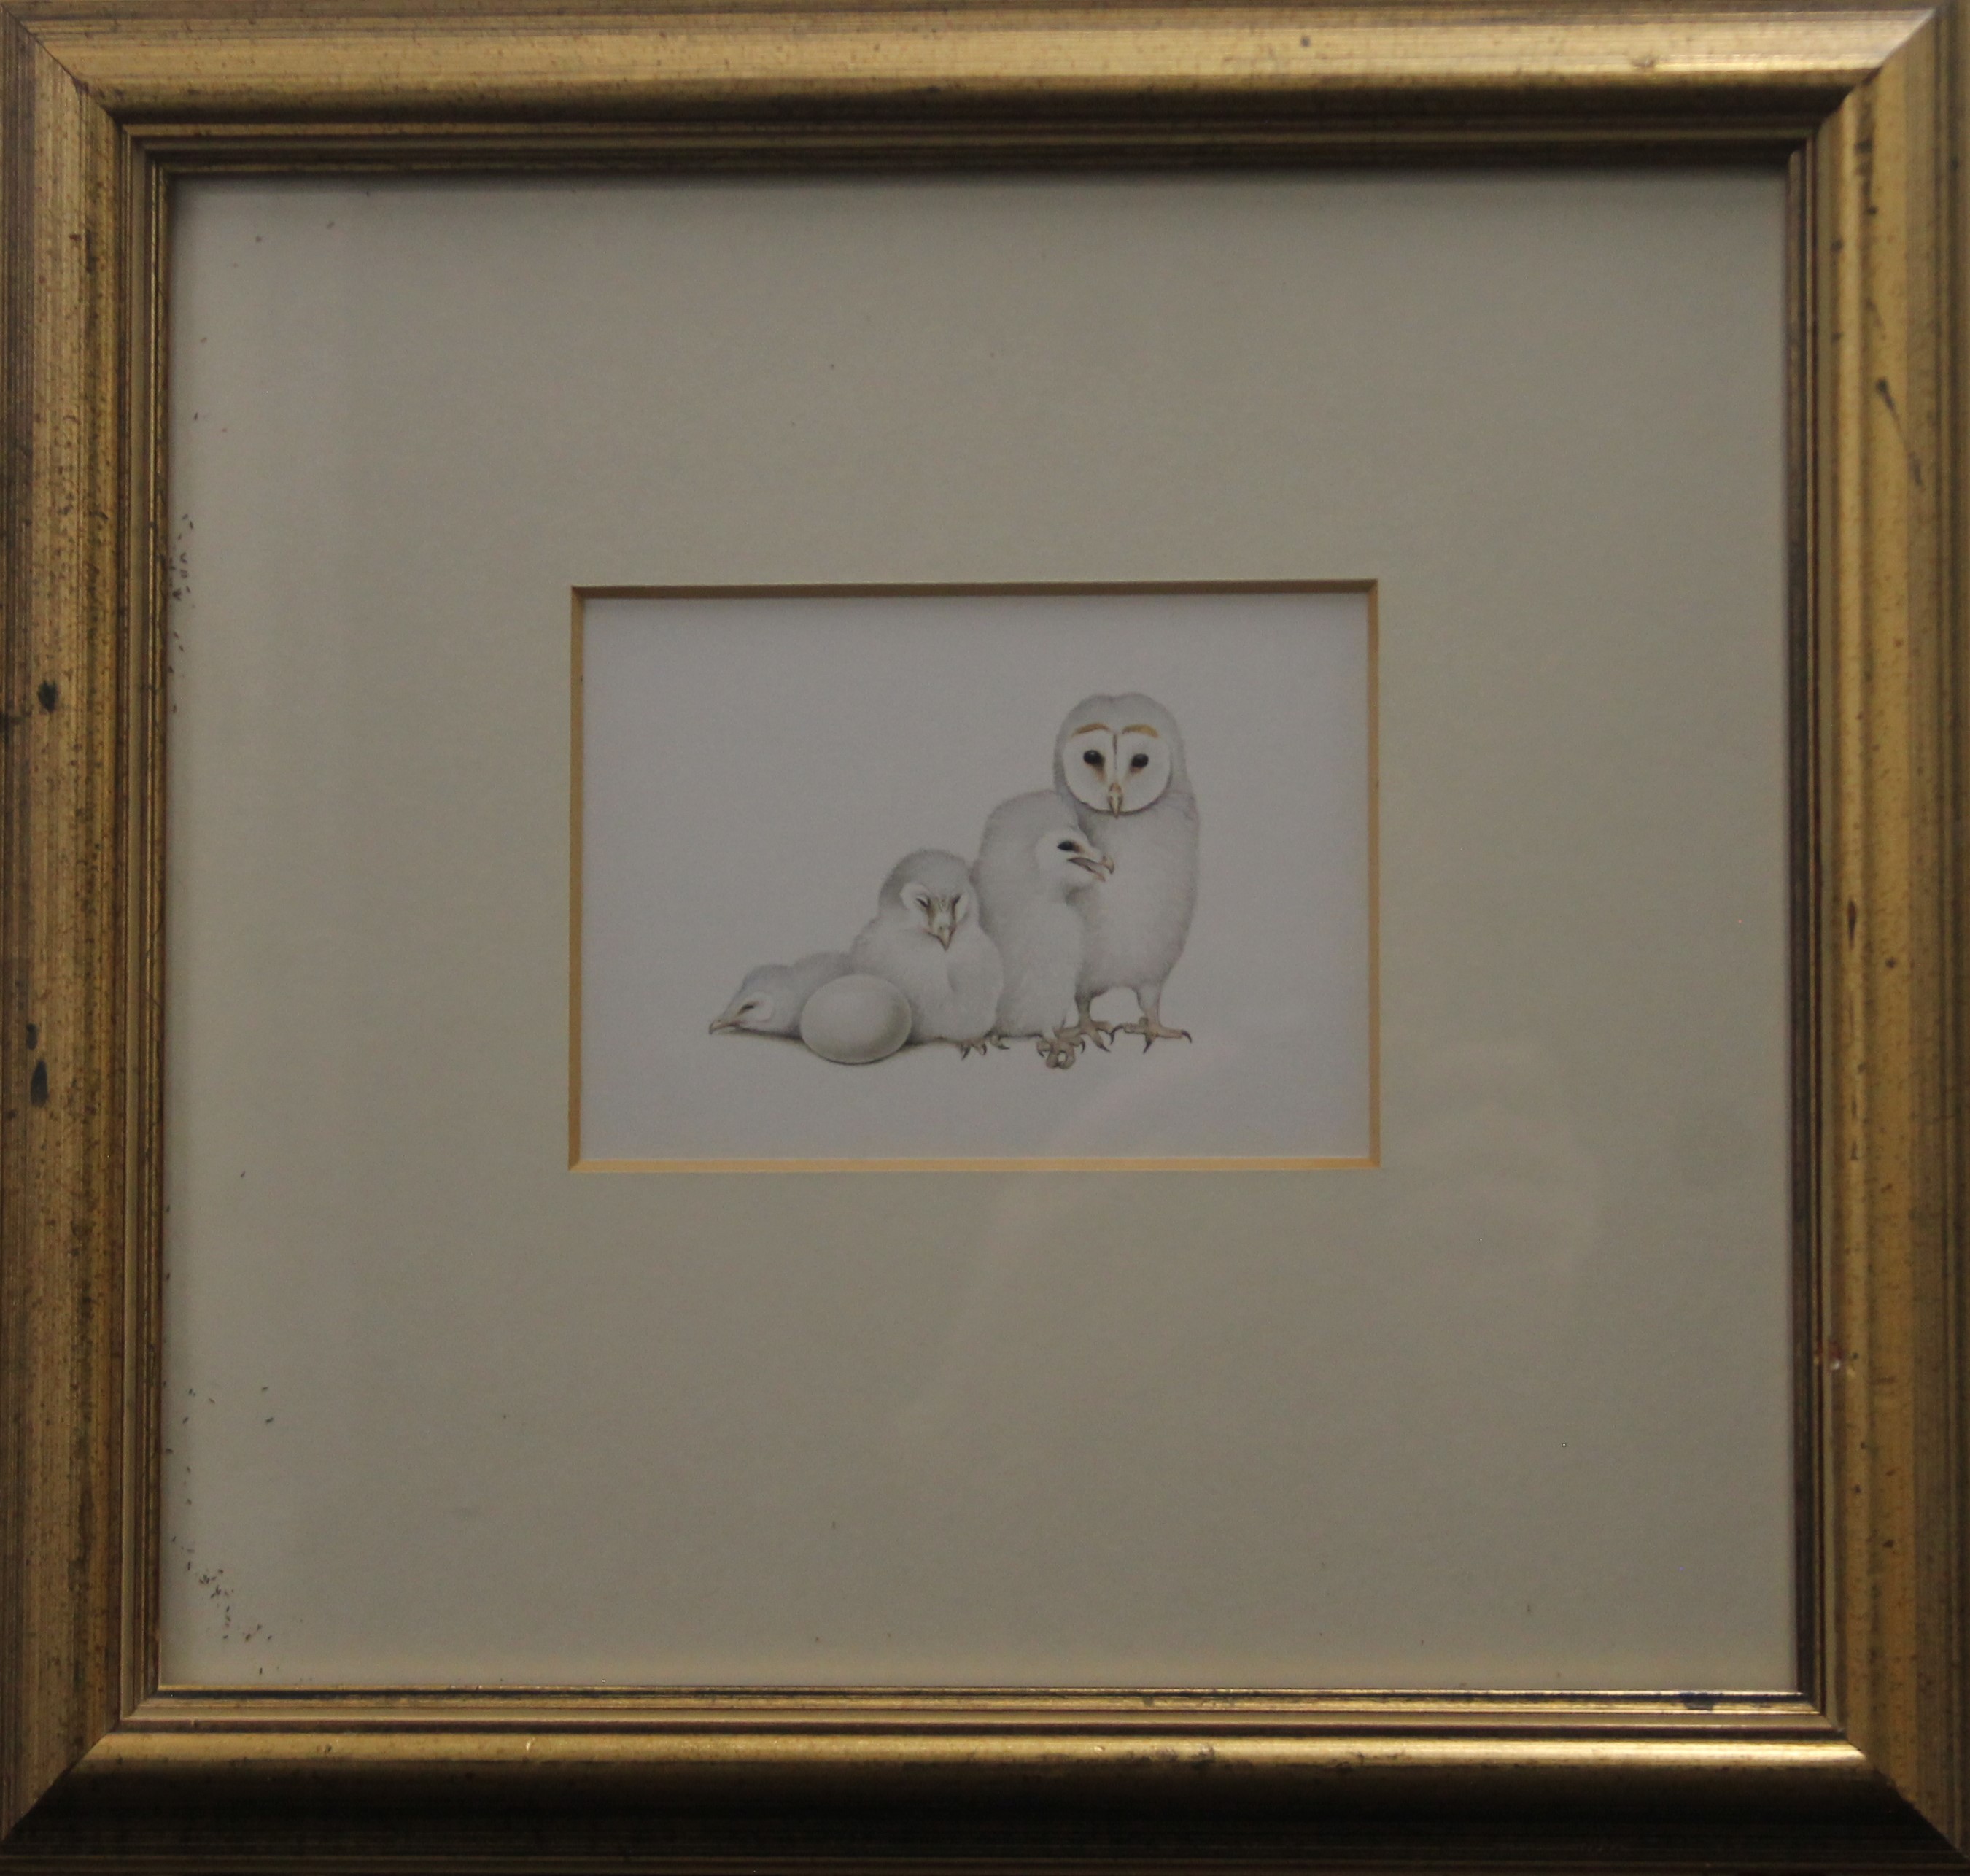 BOYER, TREVOR, (born 1948) British (AR), Owl chicks, watercolour, framed and glazed. 10 x 14 cm. - Image 2 of 2